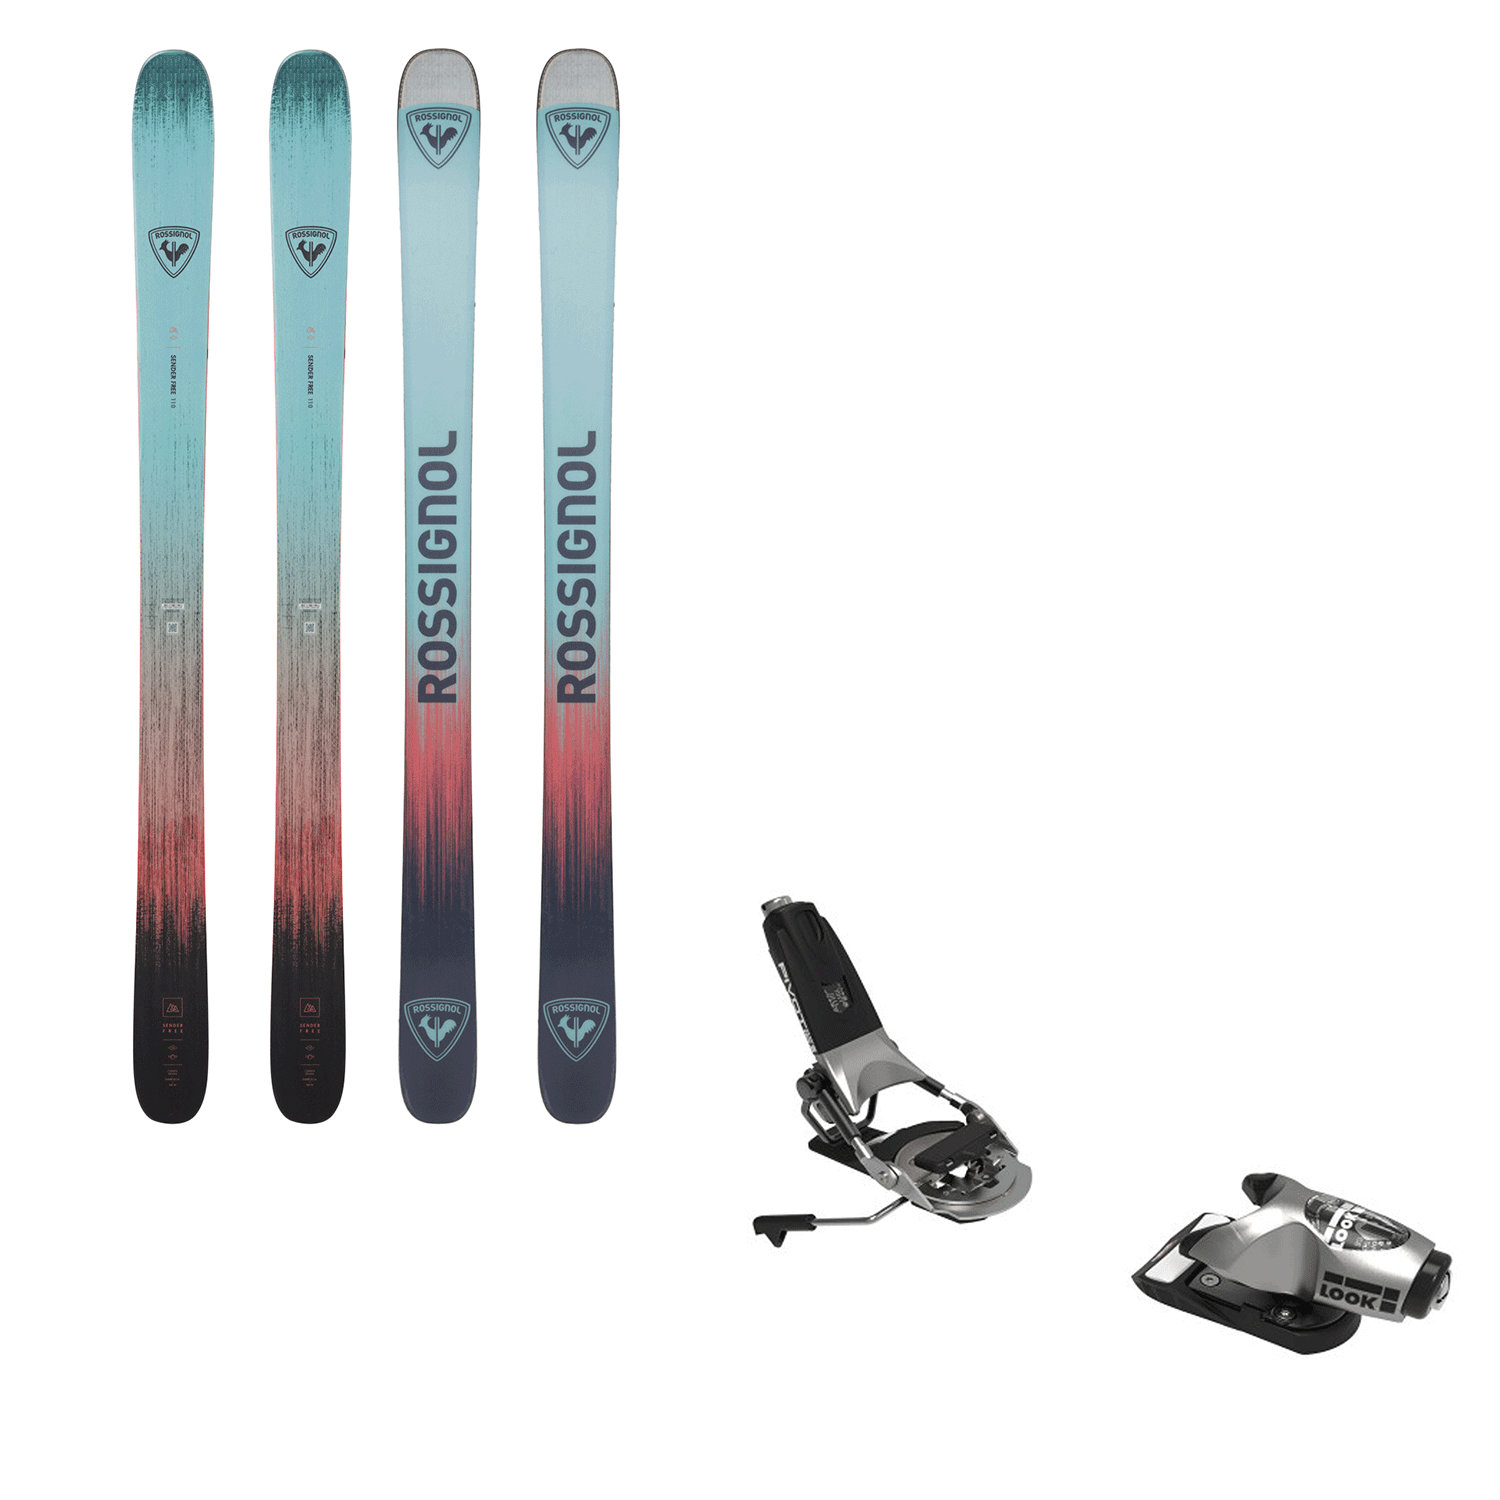 2024 Rossignol Sender Free 110 Ski Review with SkiEssentials.com 